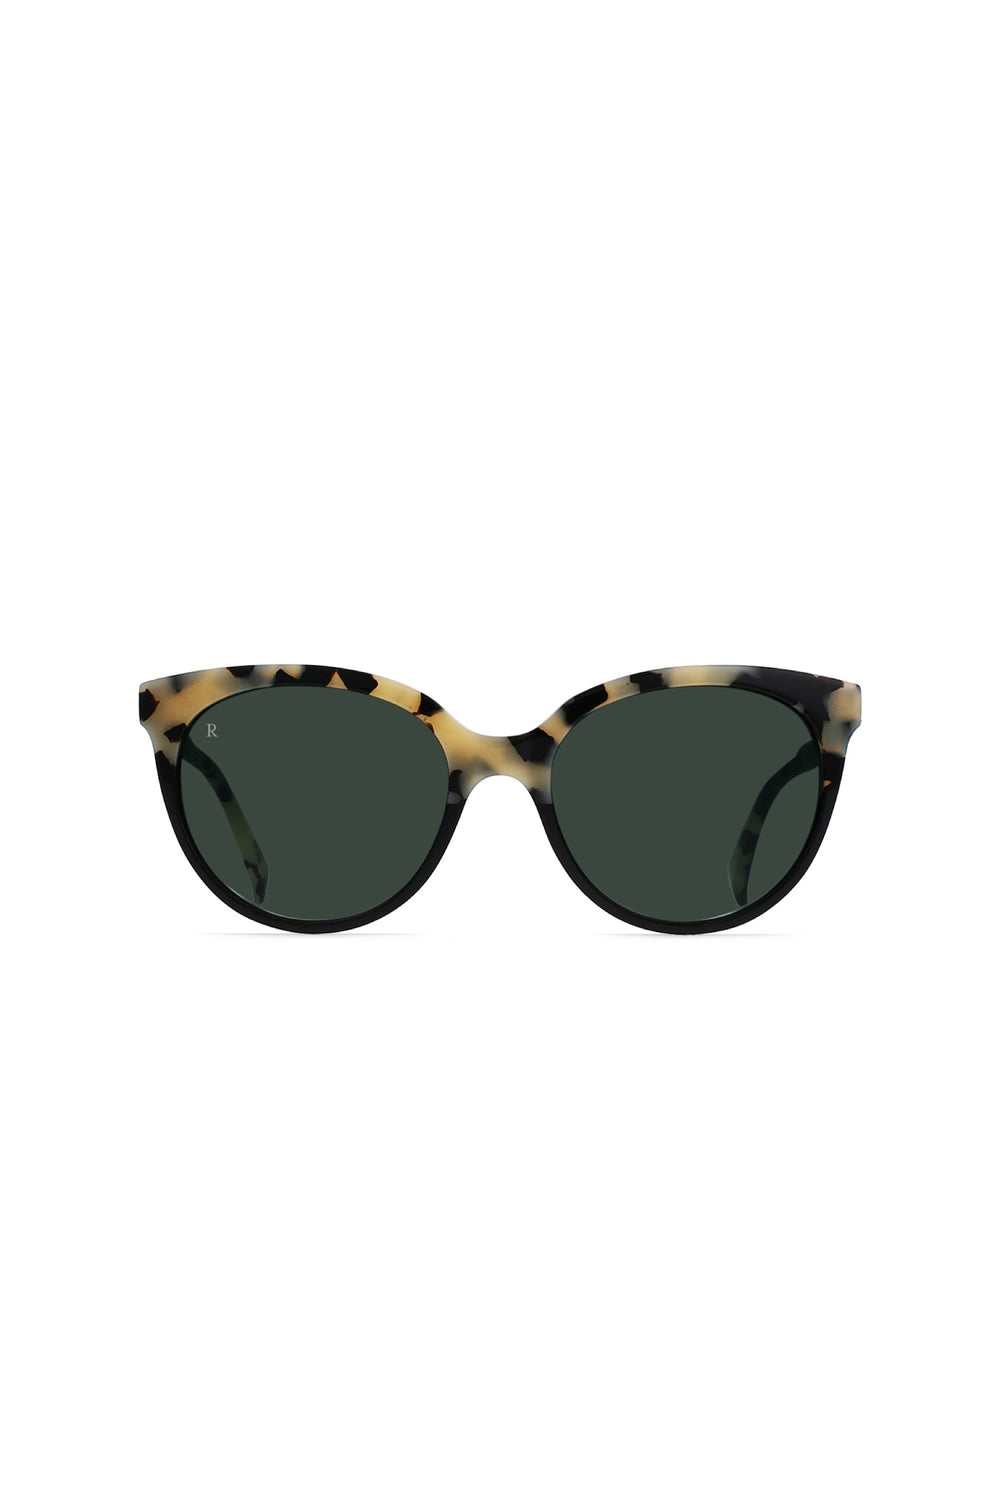 Chai Tortoise Lily Sunglasses